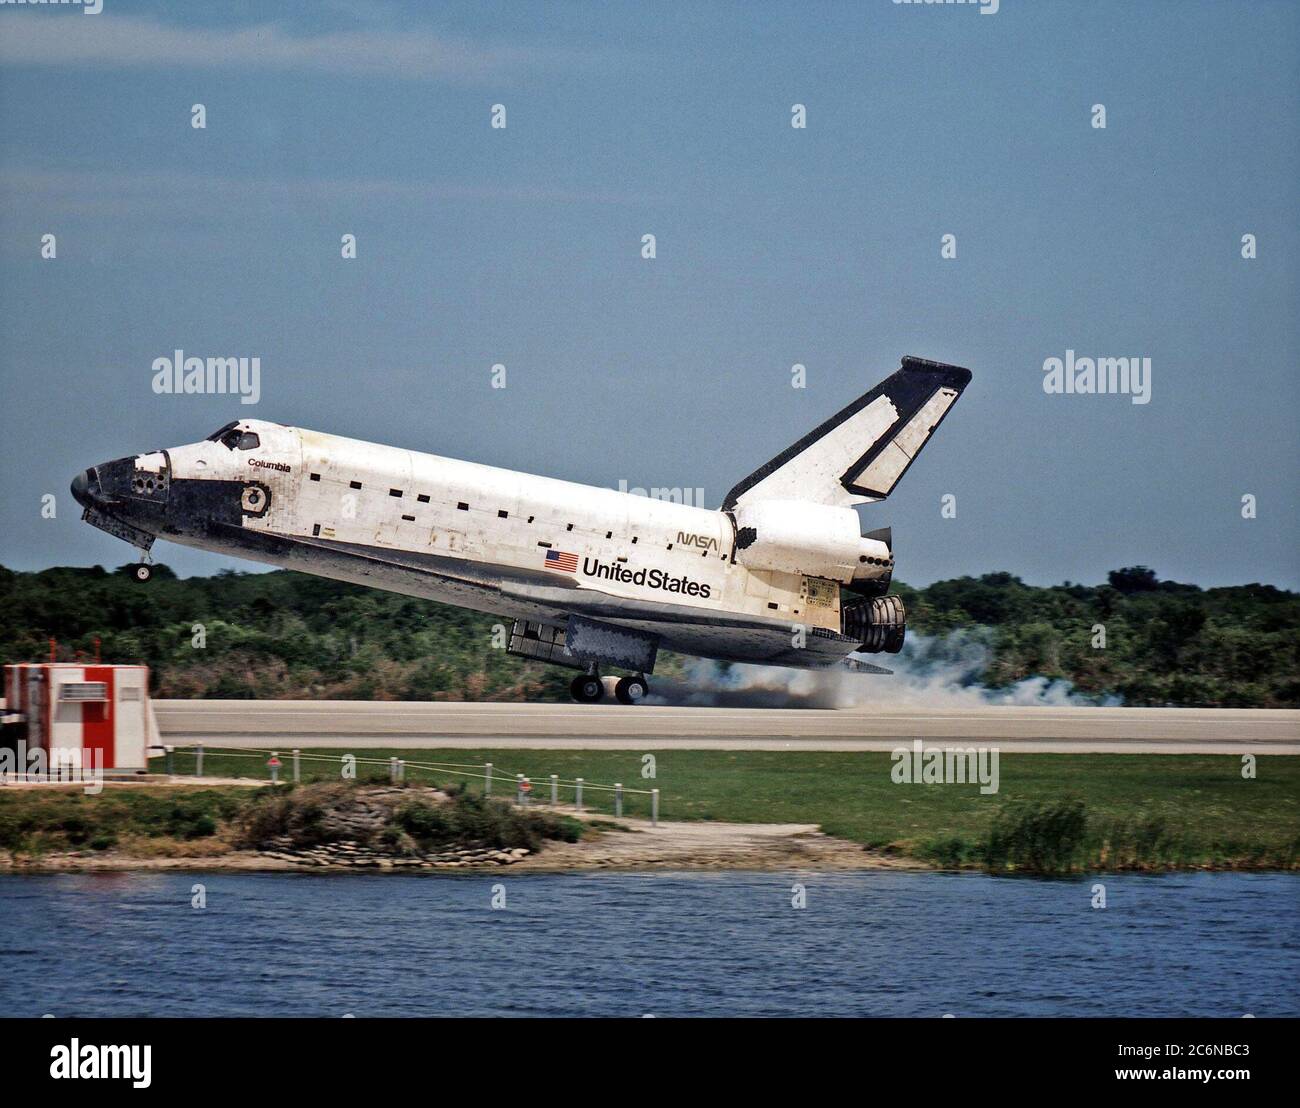 estes space shuttle columbia 1433